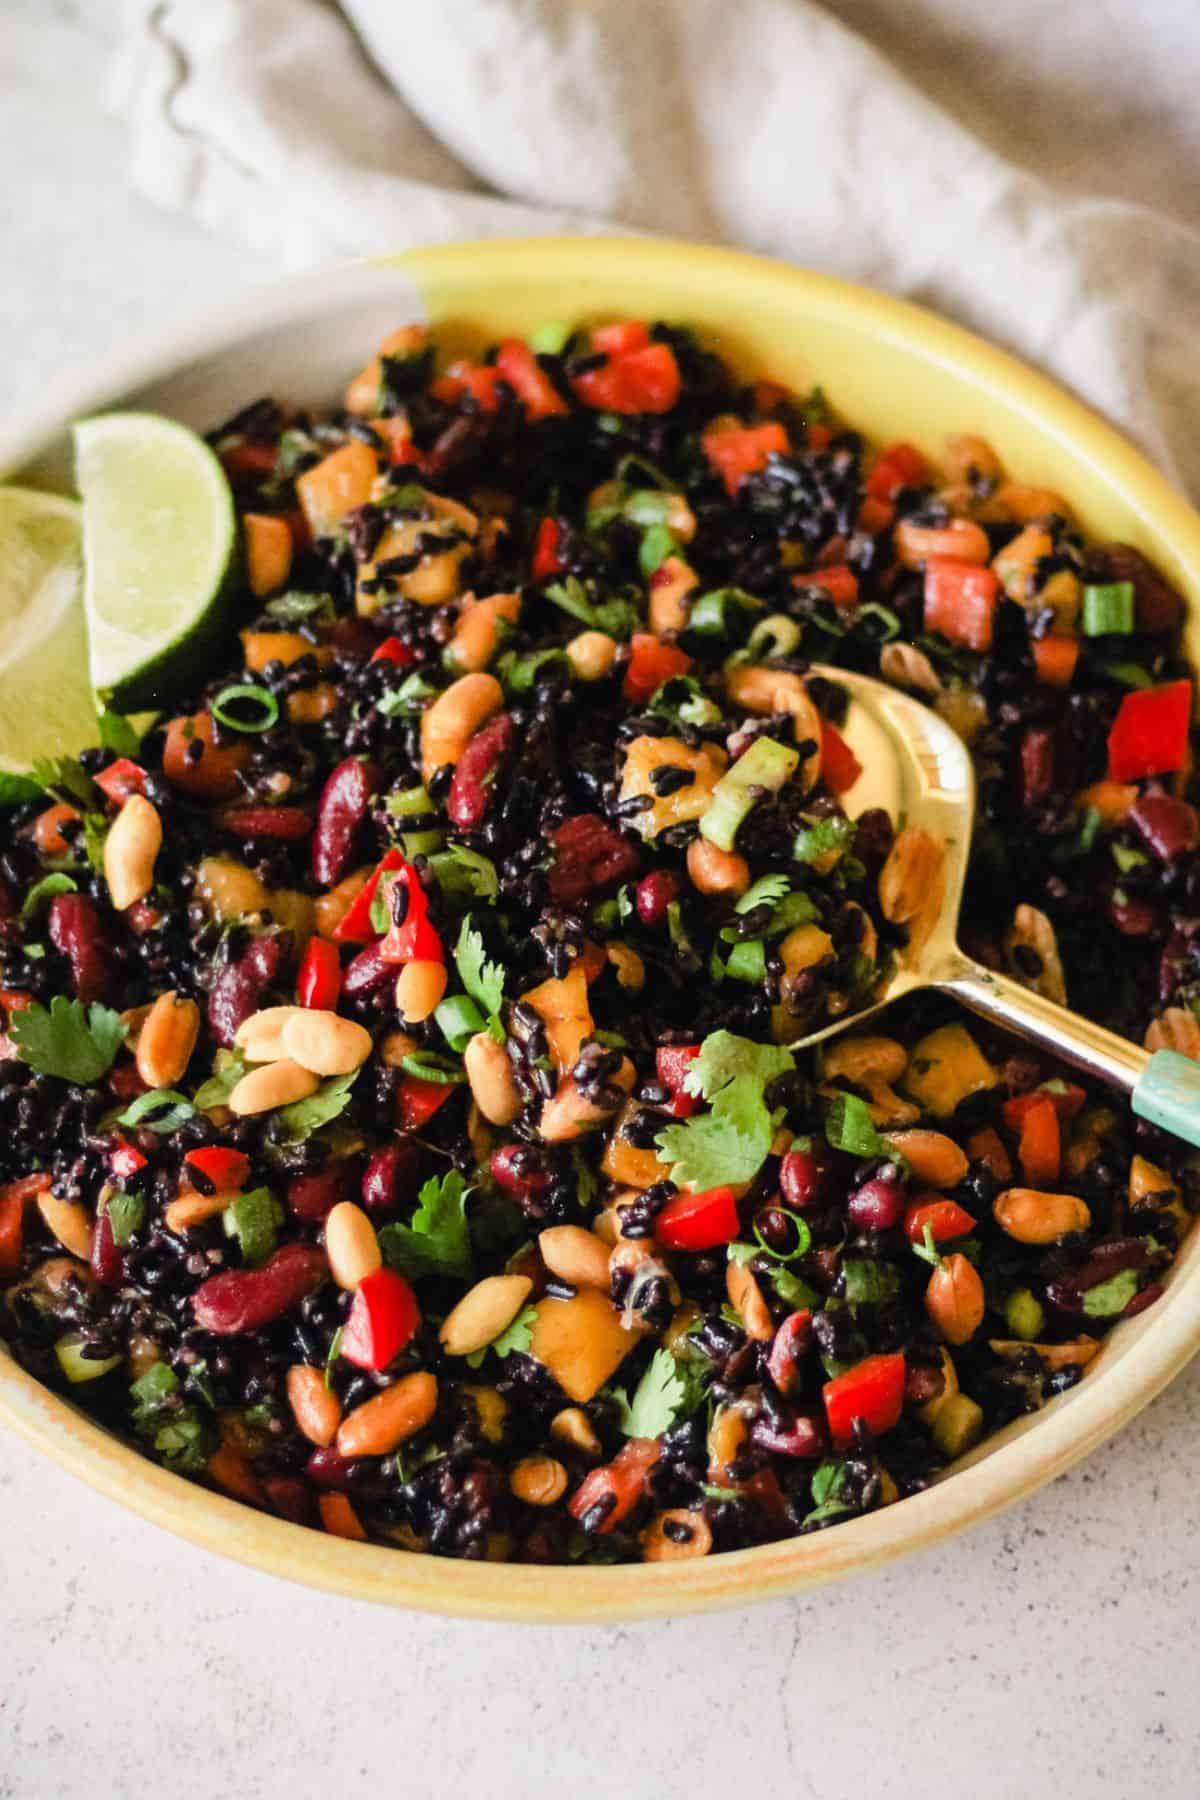 Vegan black rice salad with beans, peanuts, and mango